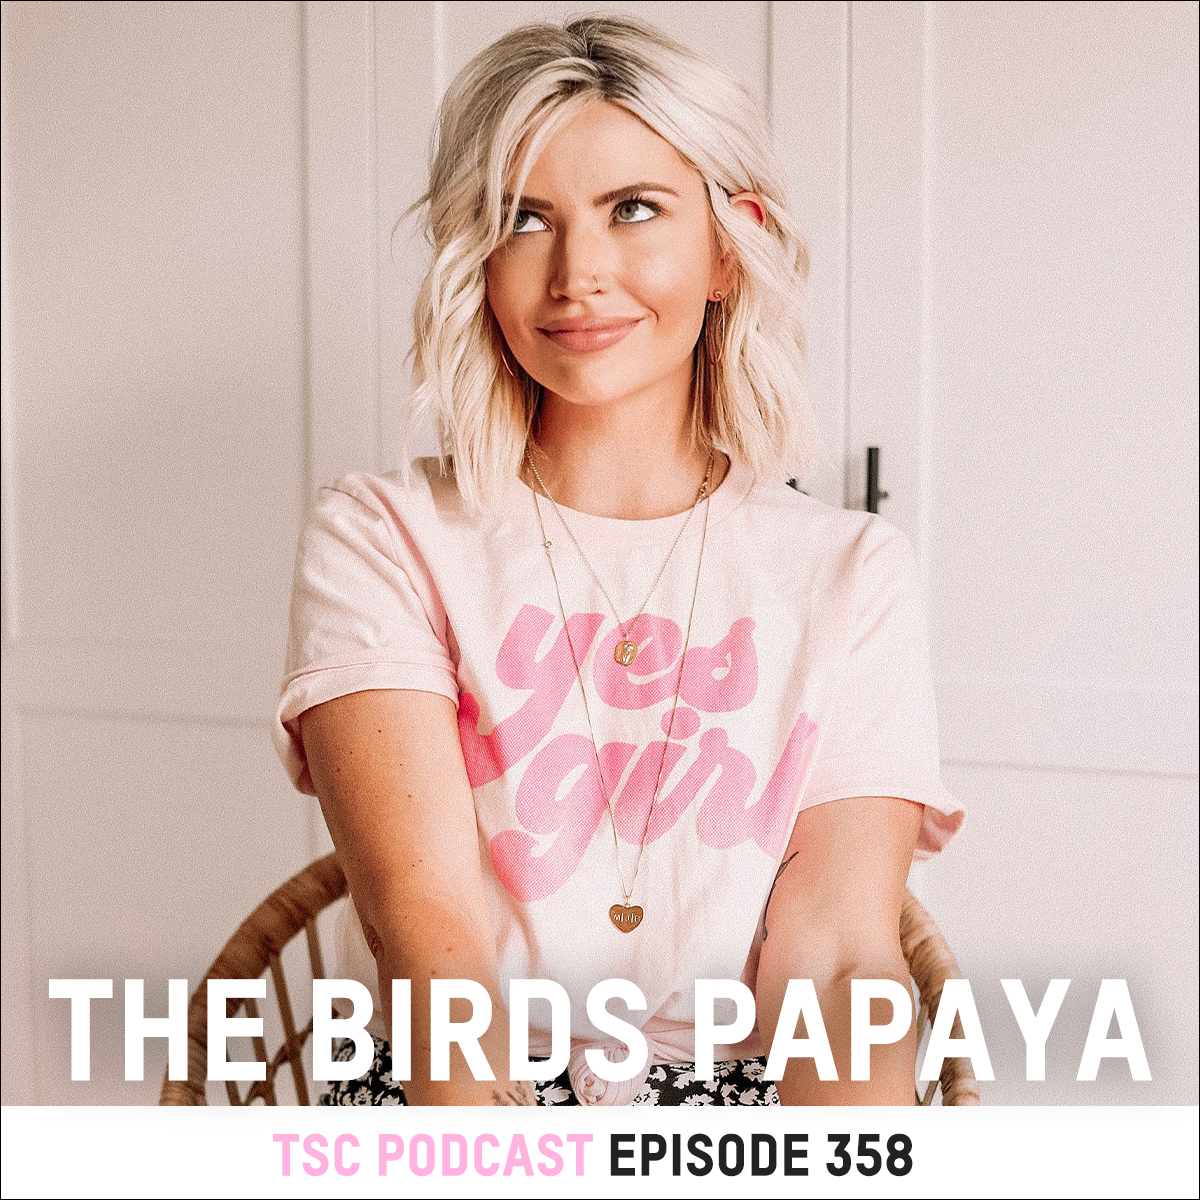 https://tscpodcast.com/wp-content/uploads/2022/08/The-Birds-Papaya-Blog-Post.png